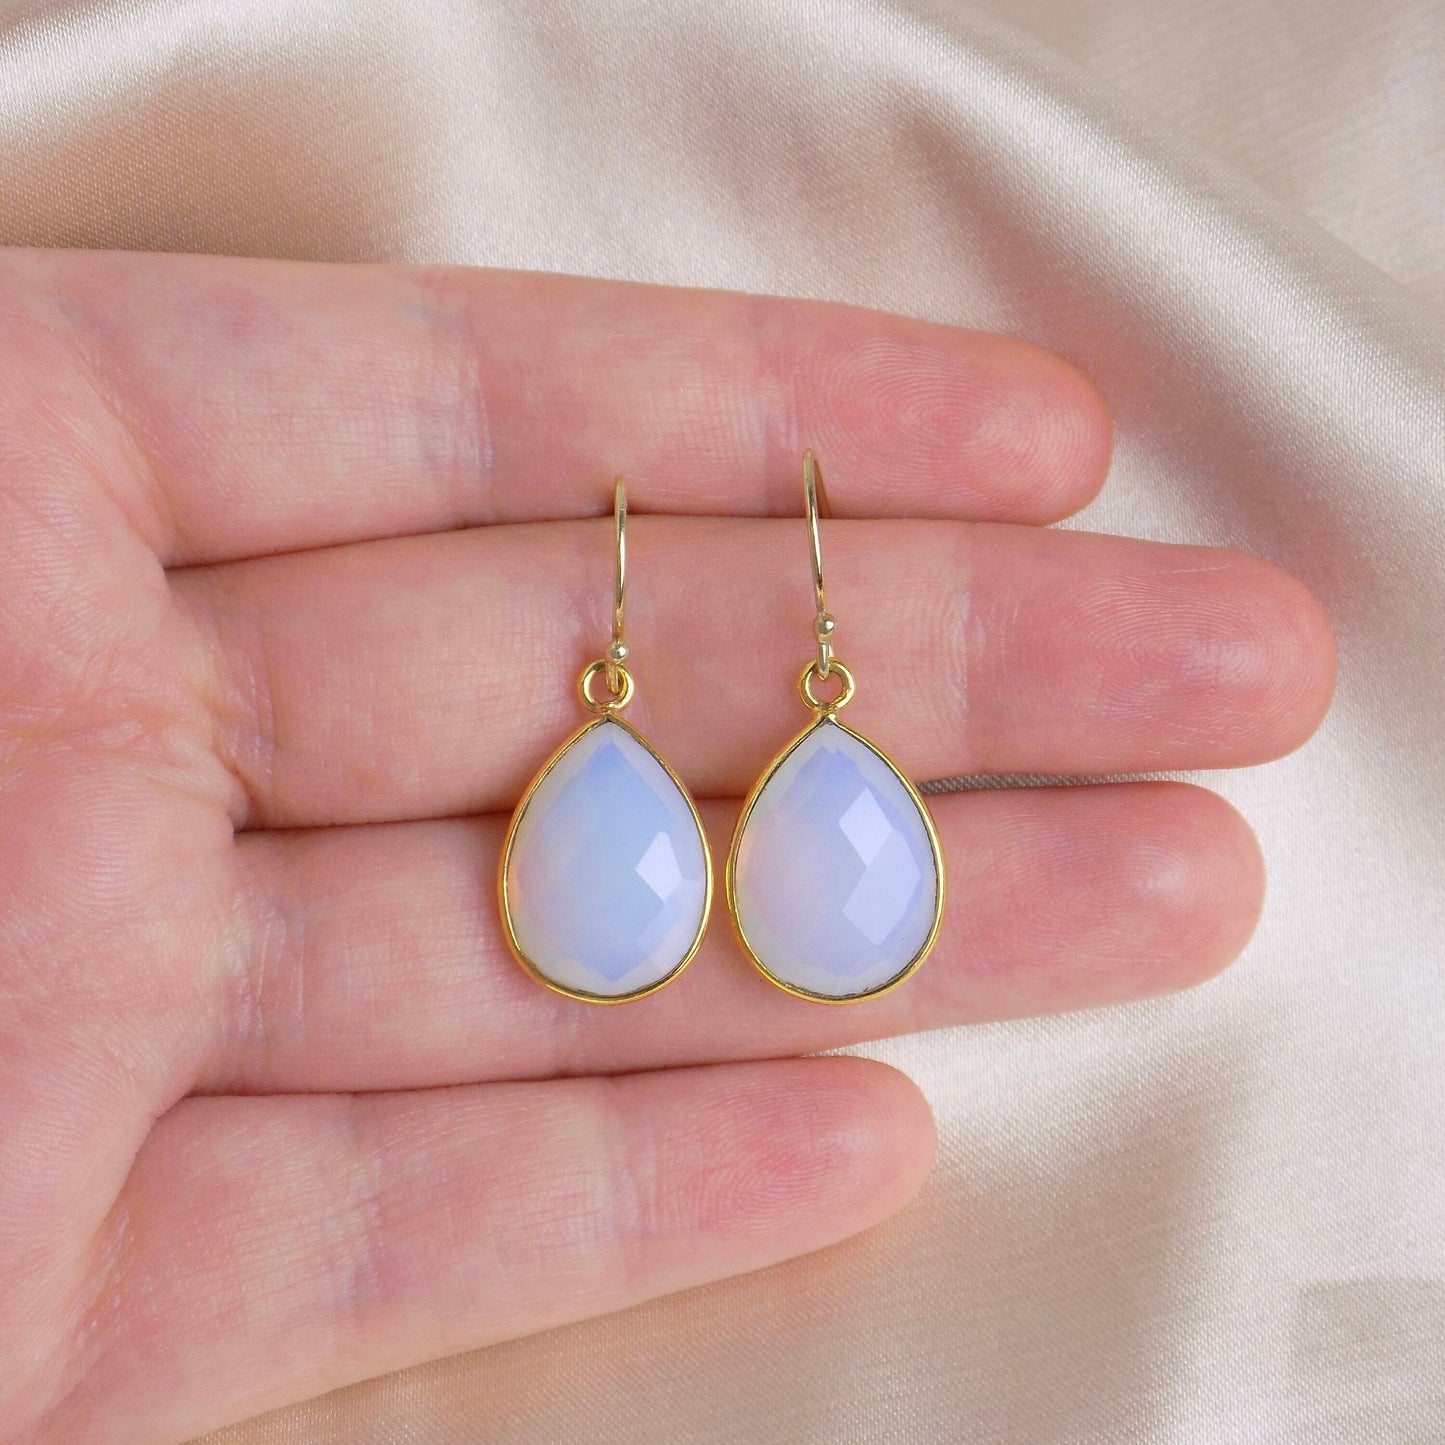 Teardrop Opalite Earrings Gold, Opal Gemstone Drop Earring, Light Blue White Crystal, October Birthstone Gift For Mom, M6-614